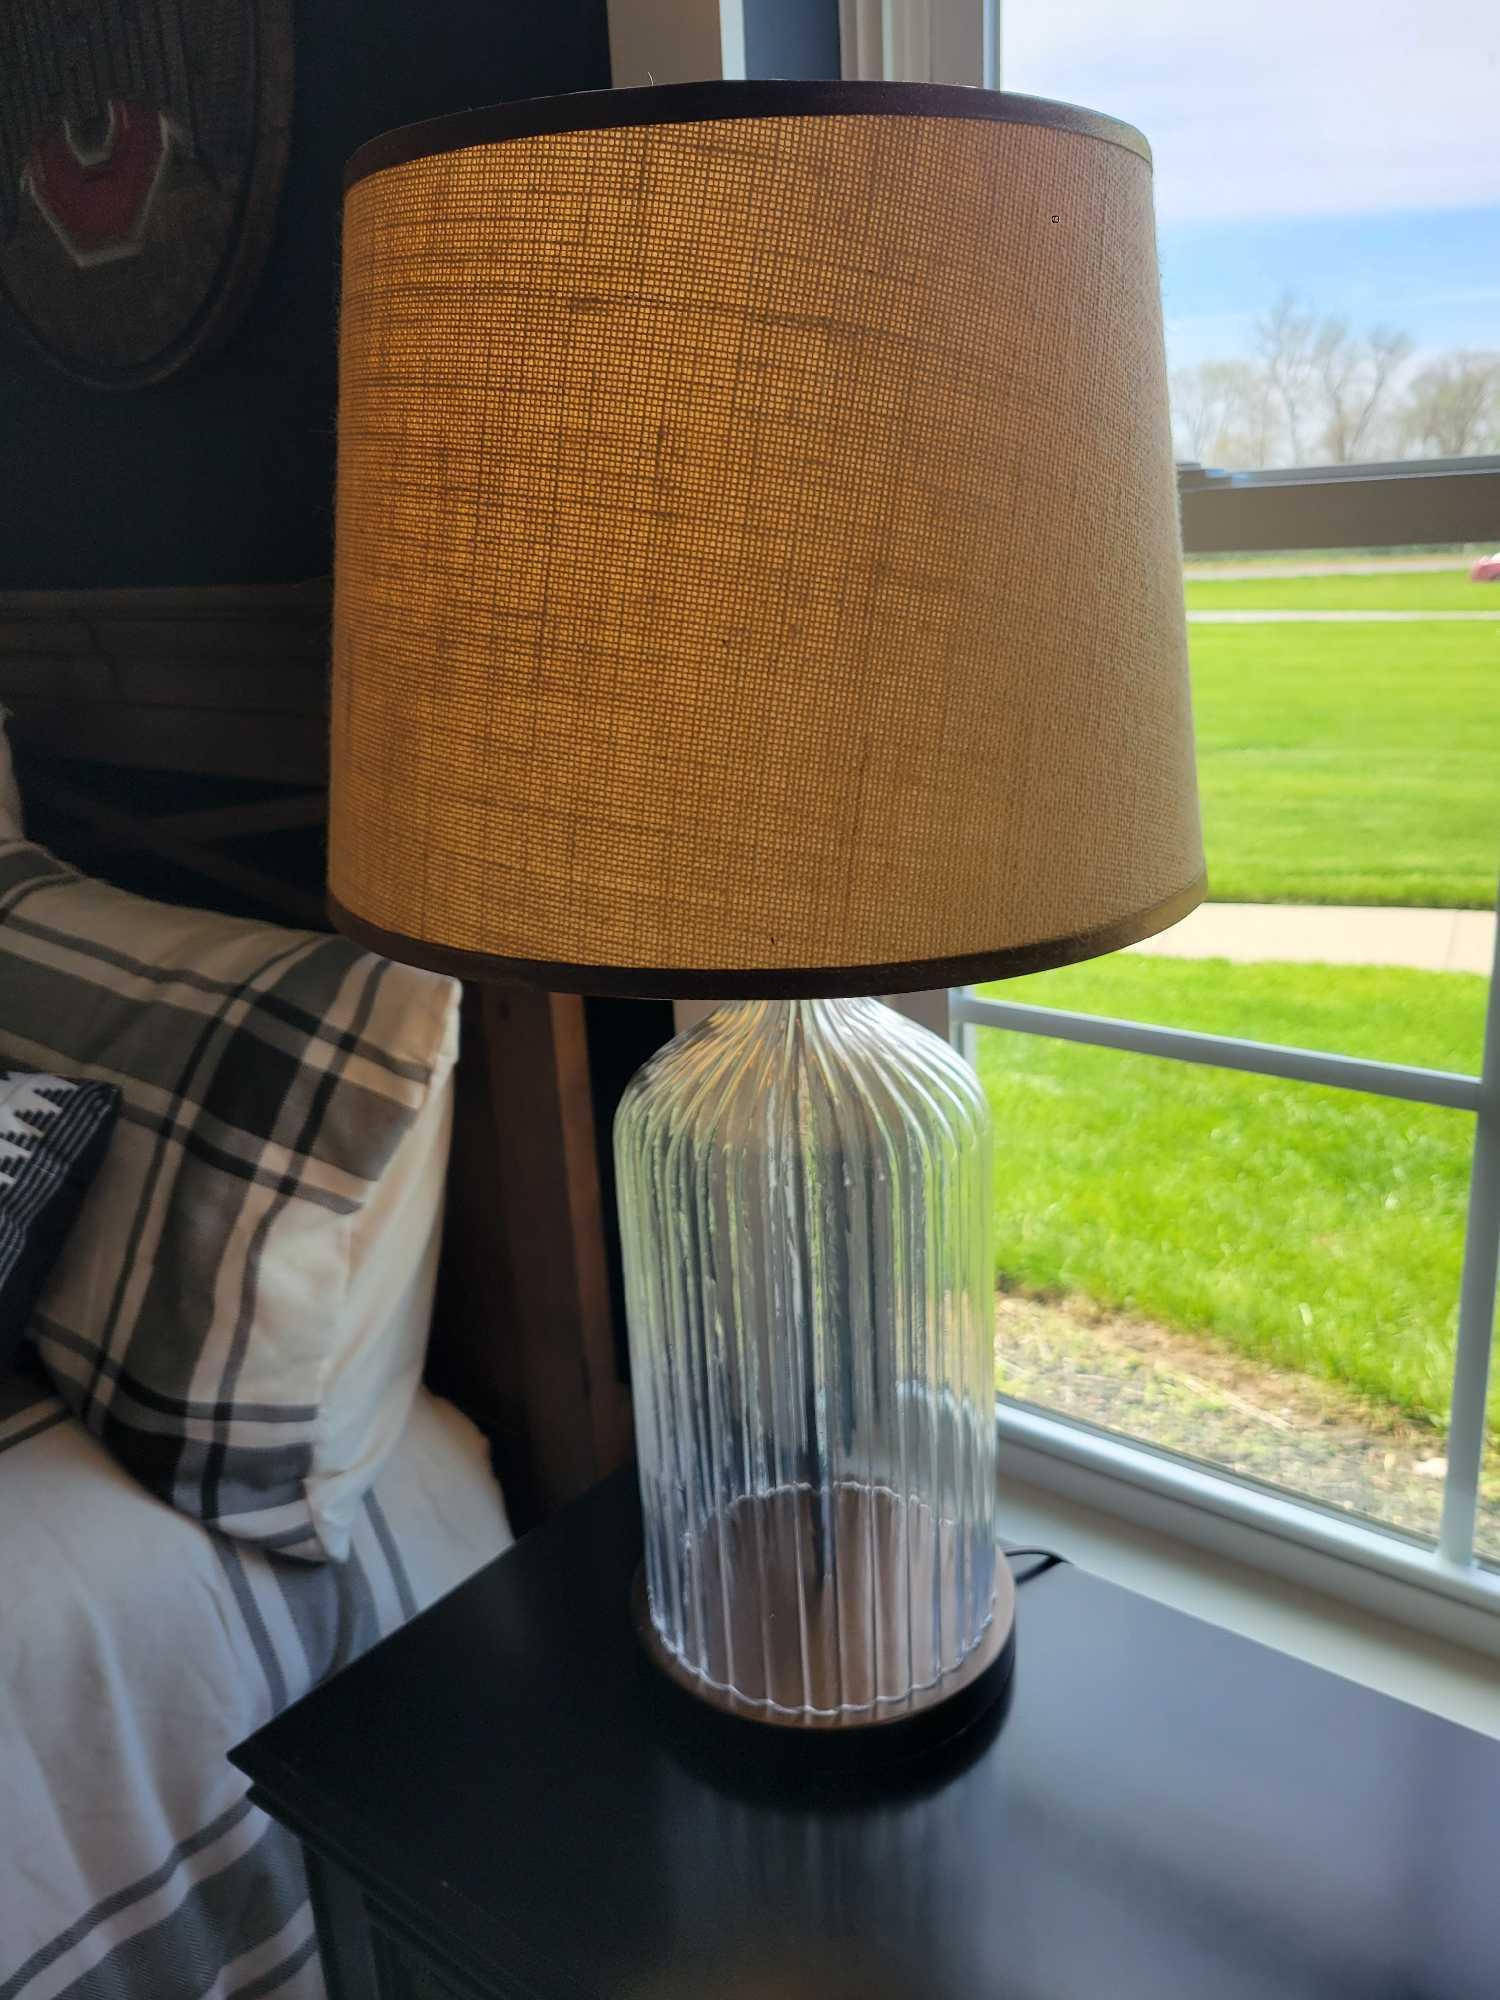 Glass bedroom lamp, decor helmet and Ohio Buckeye state print